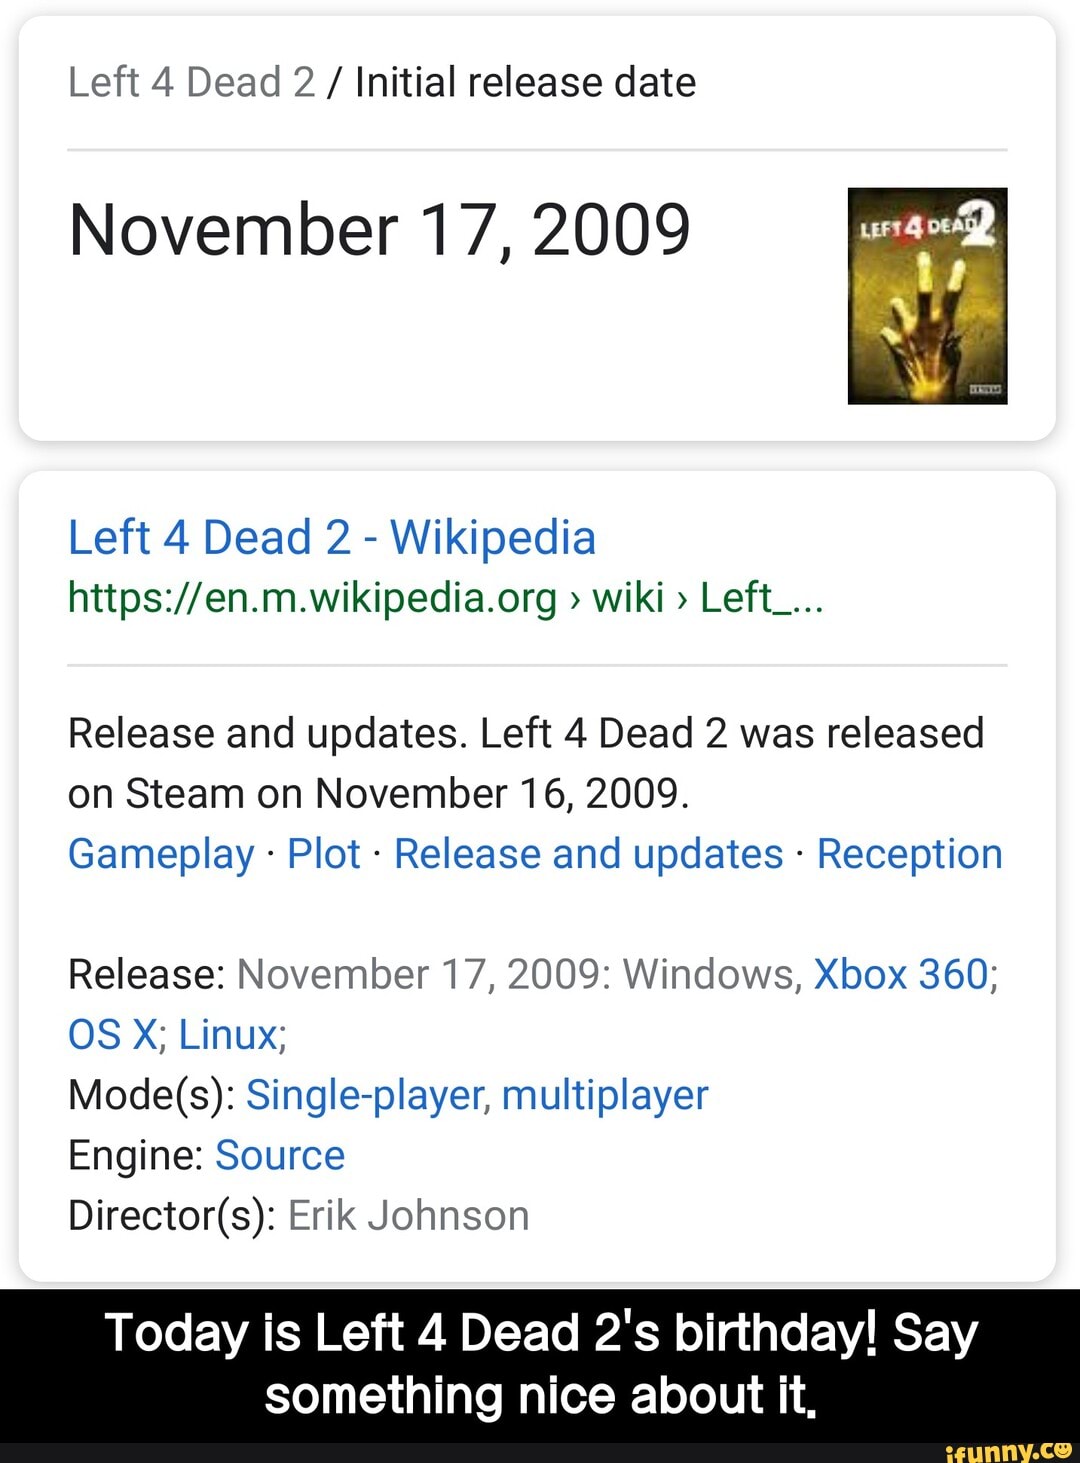 Left 4 Dead - Wikipedia